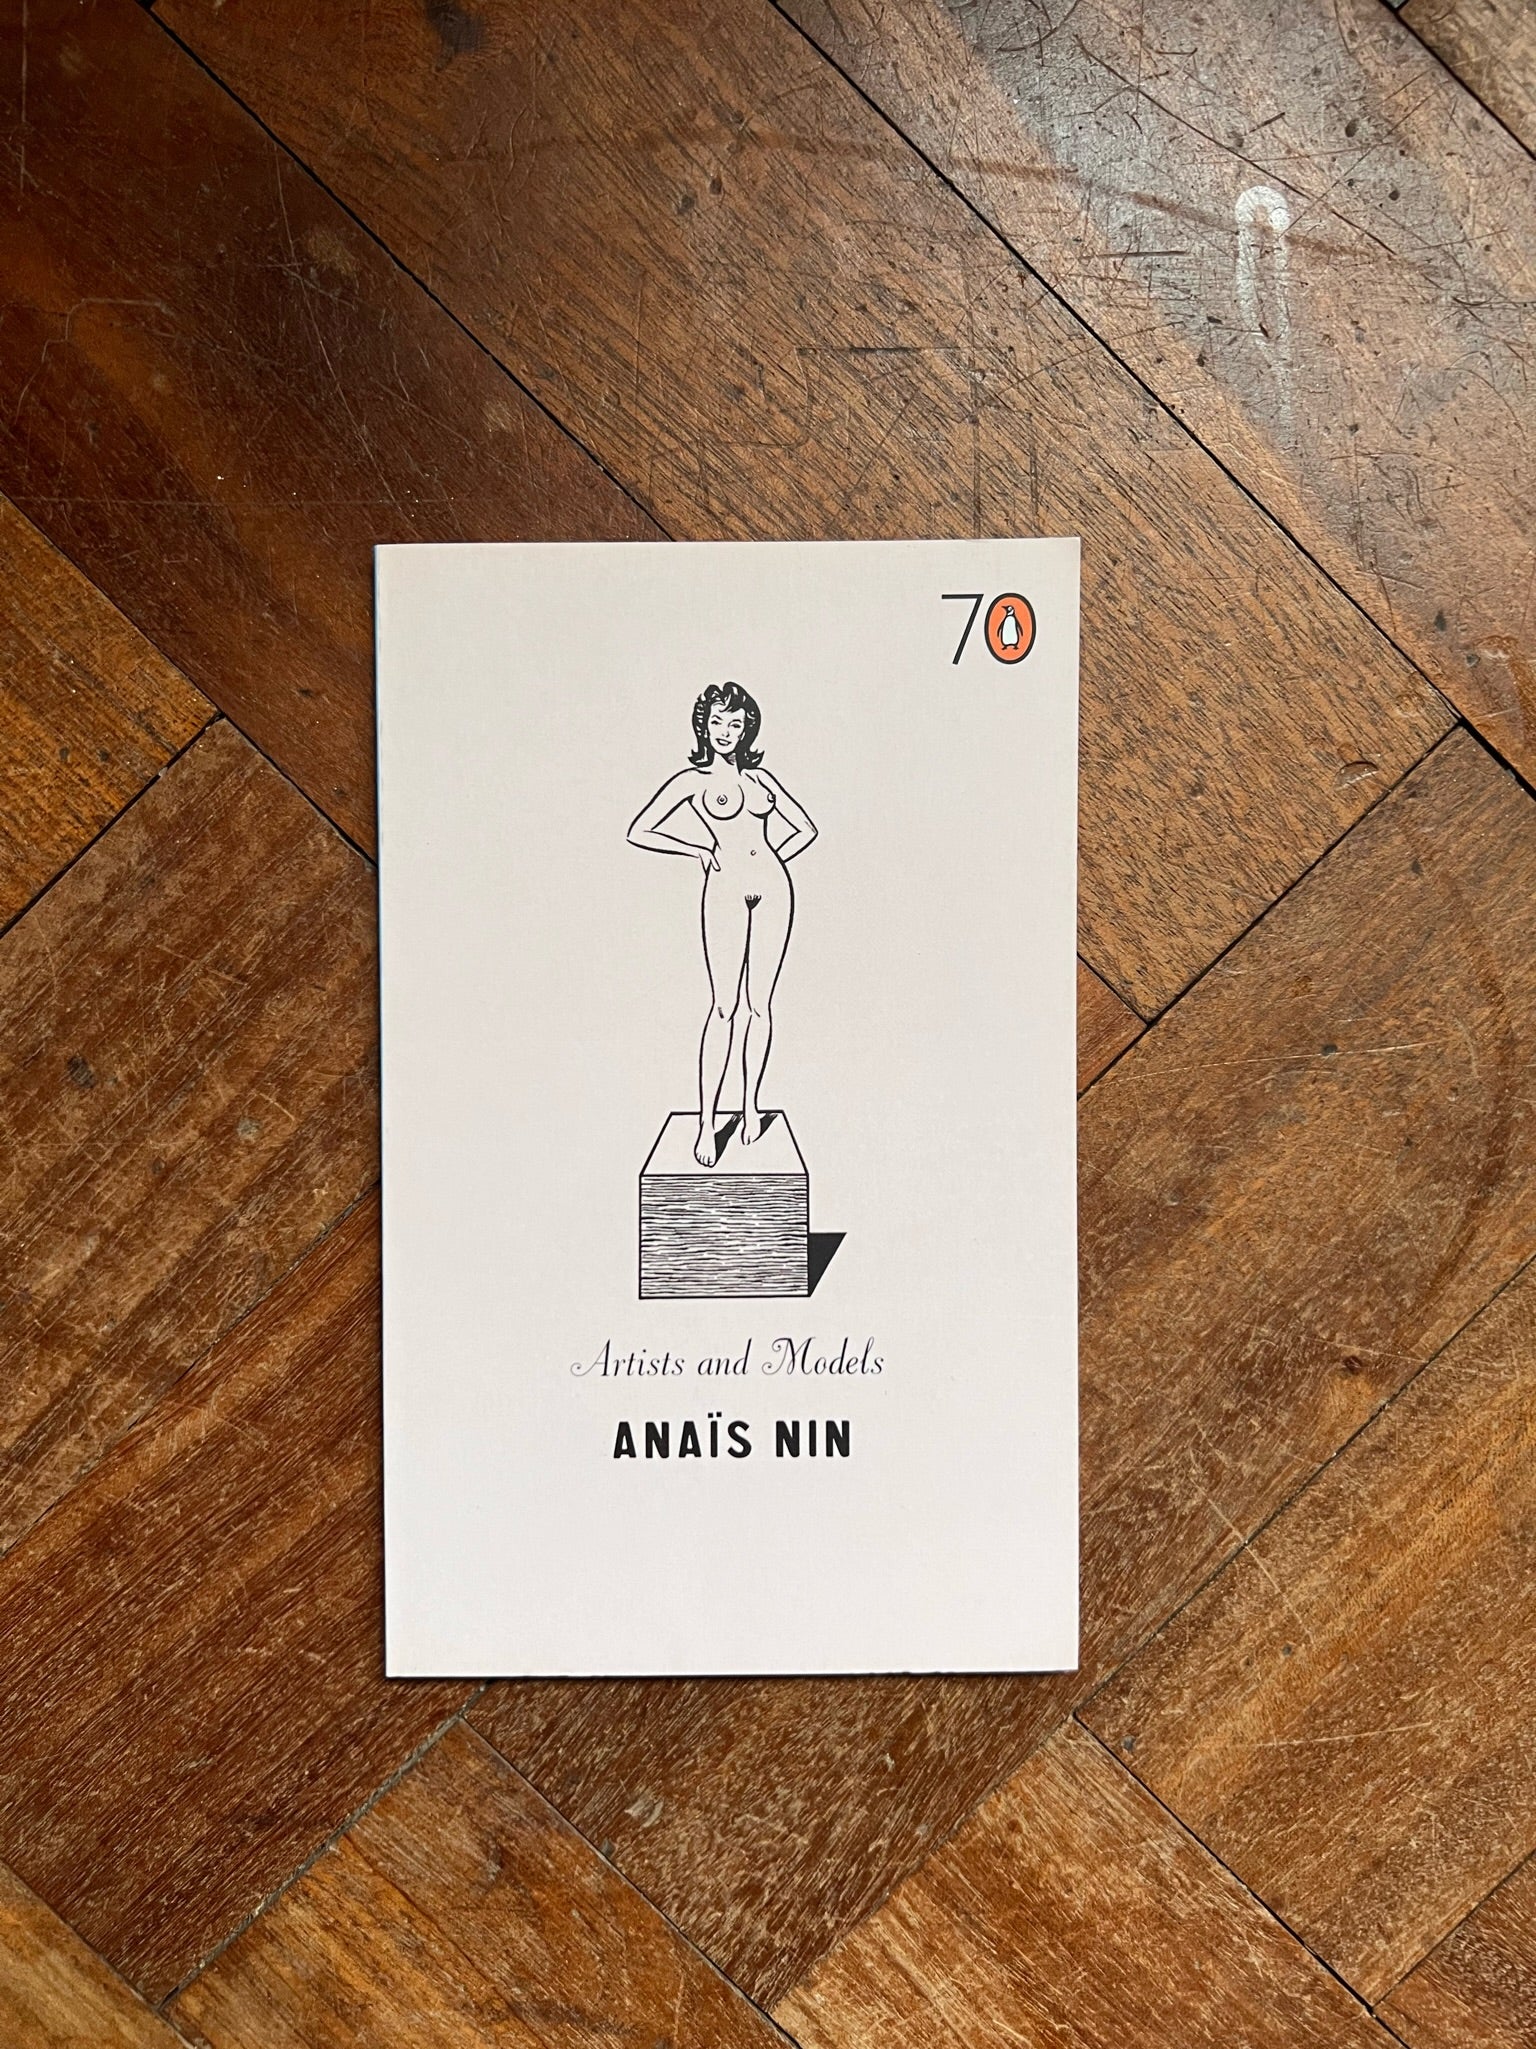 Anais Nin - Artists and Models